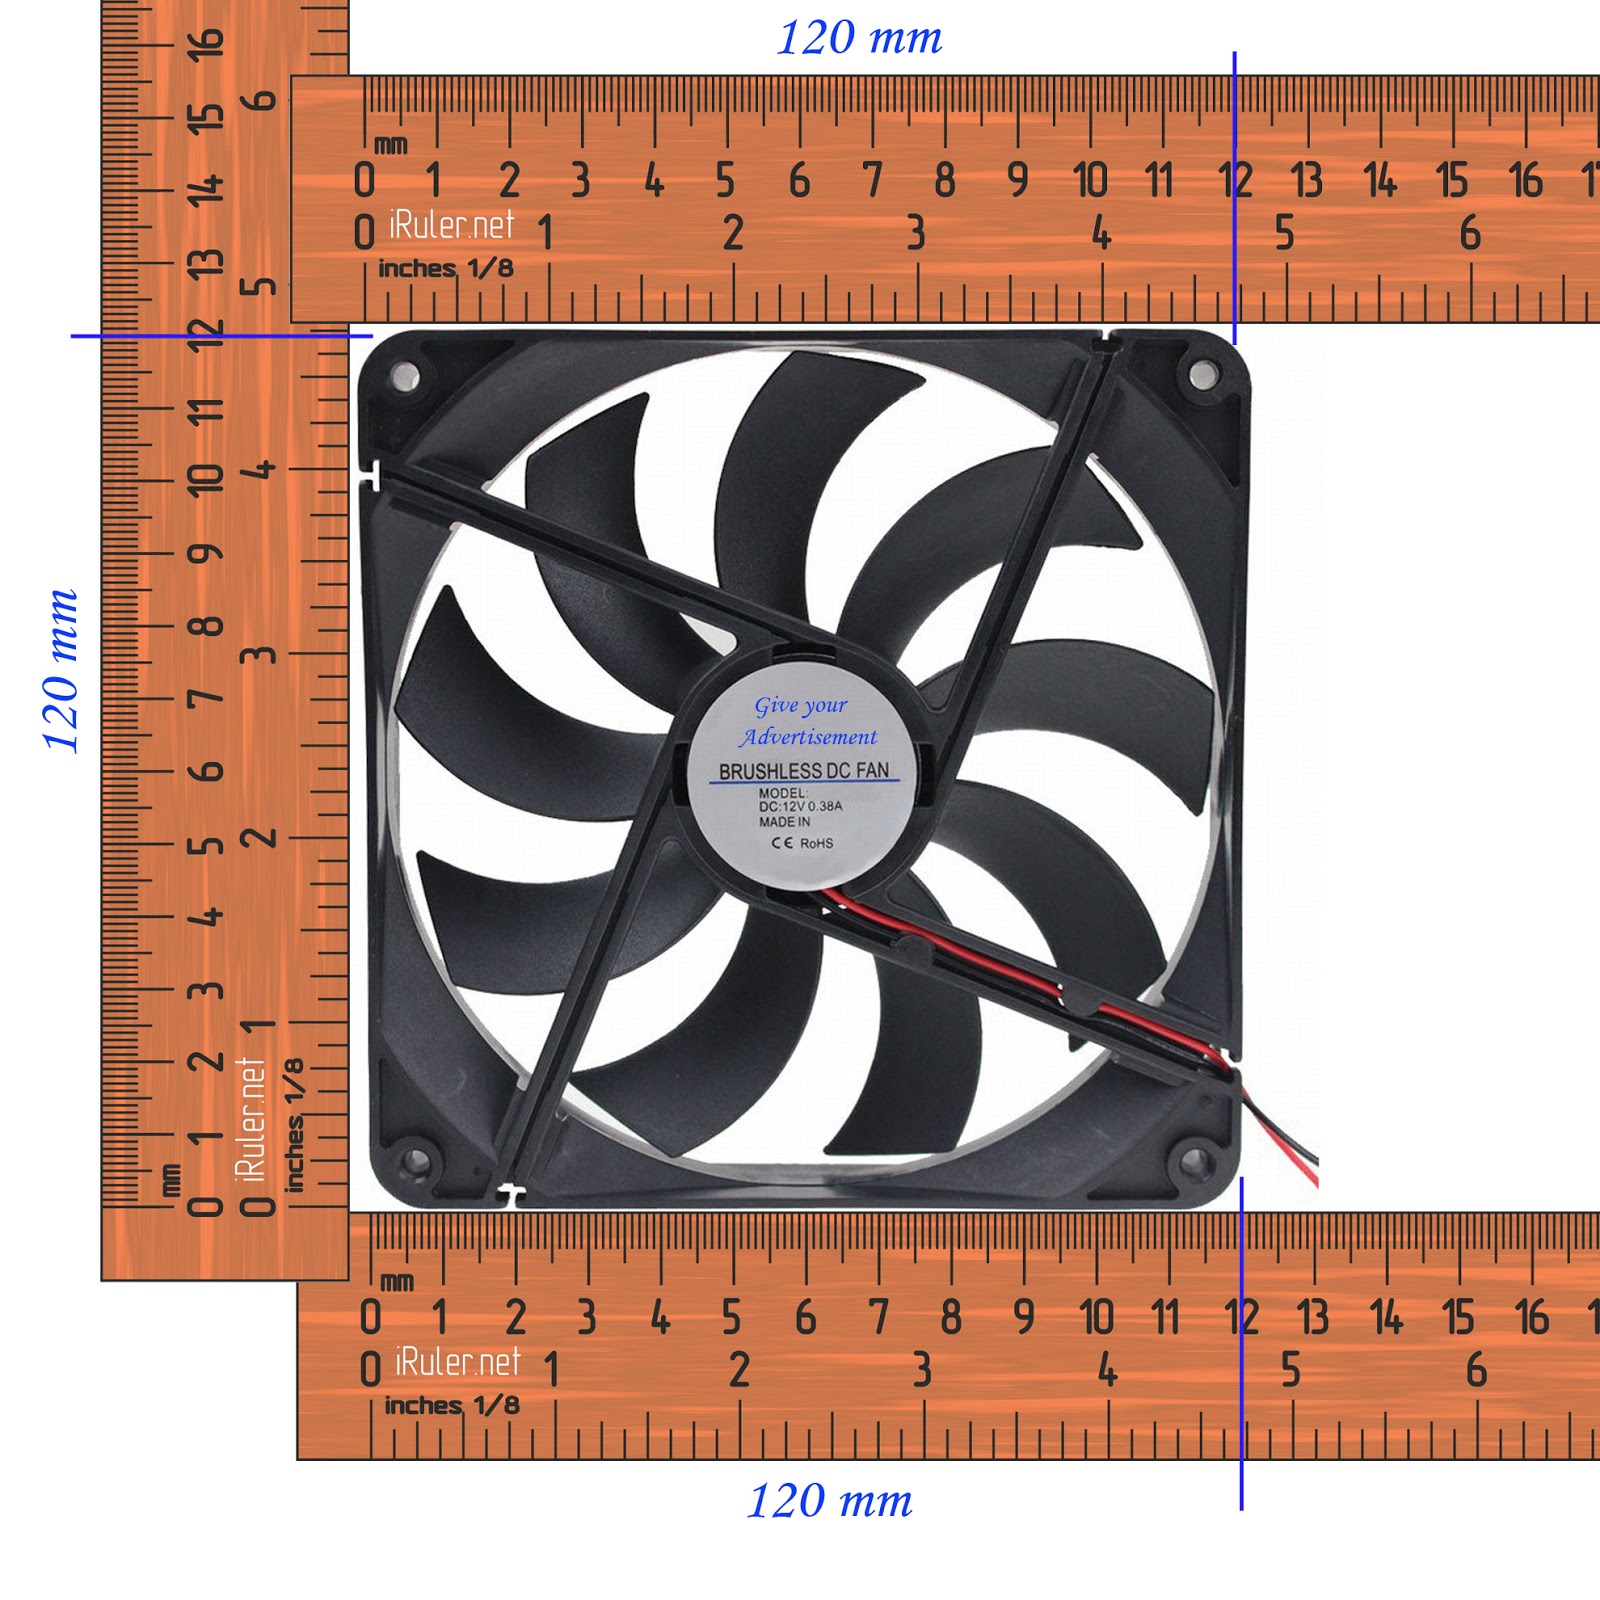 standard pc fan sizes in inches